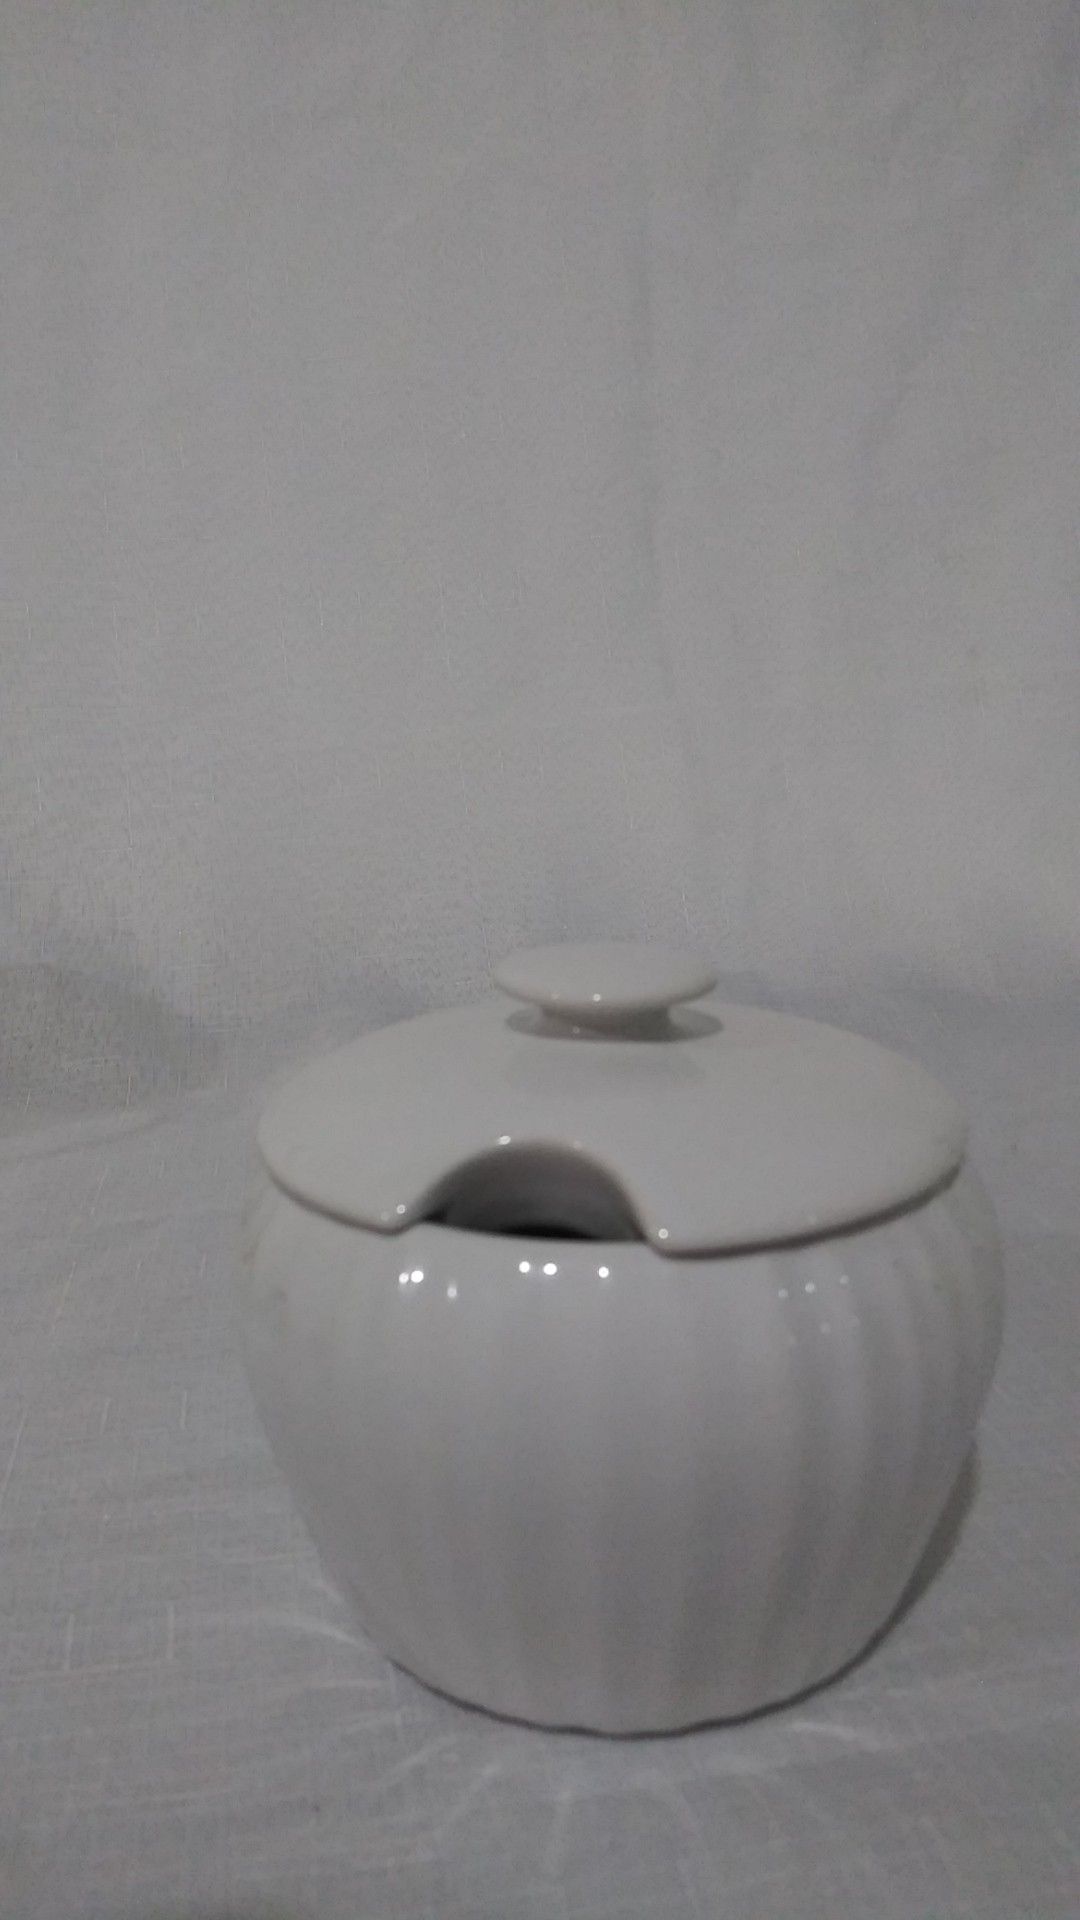 Corning Sugar Bowl with lid